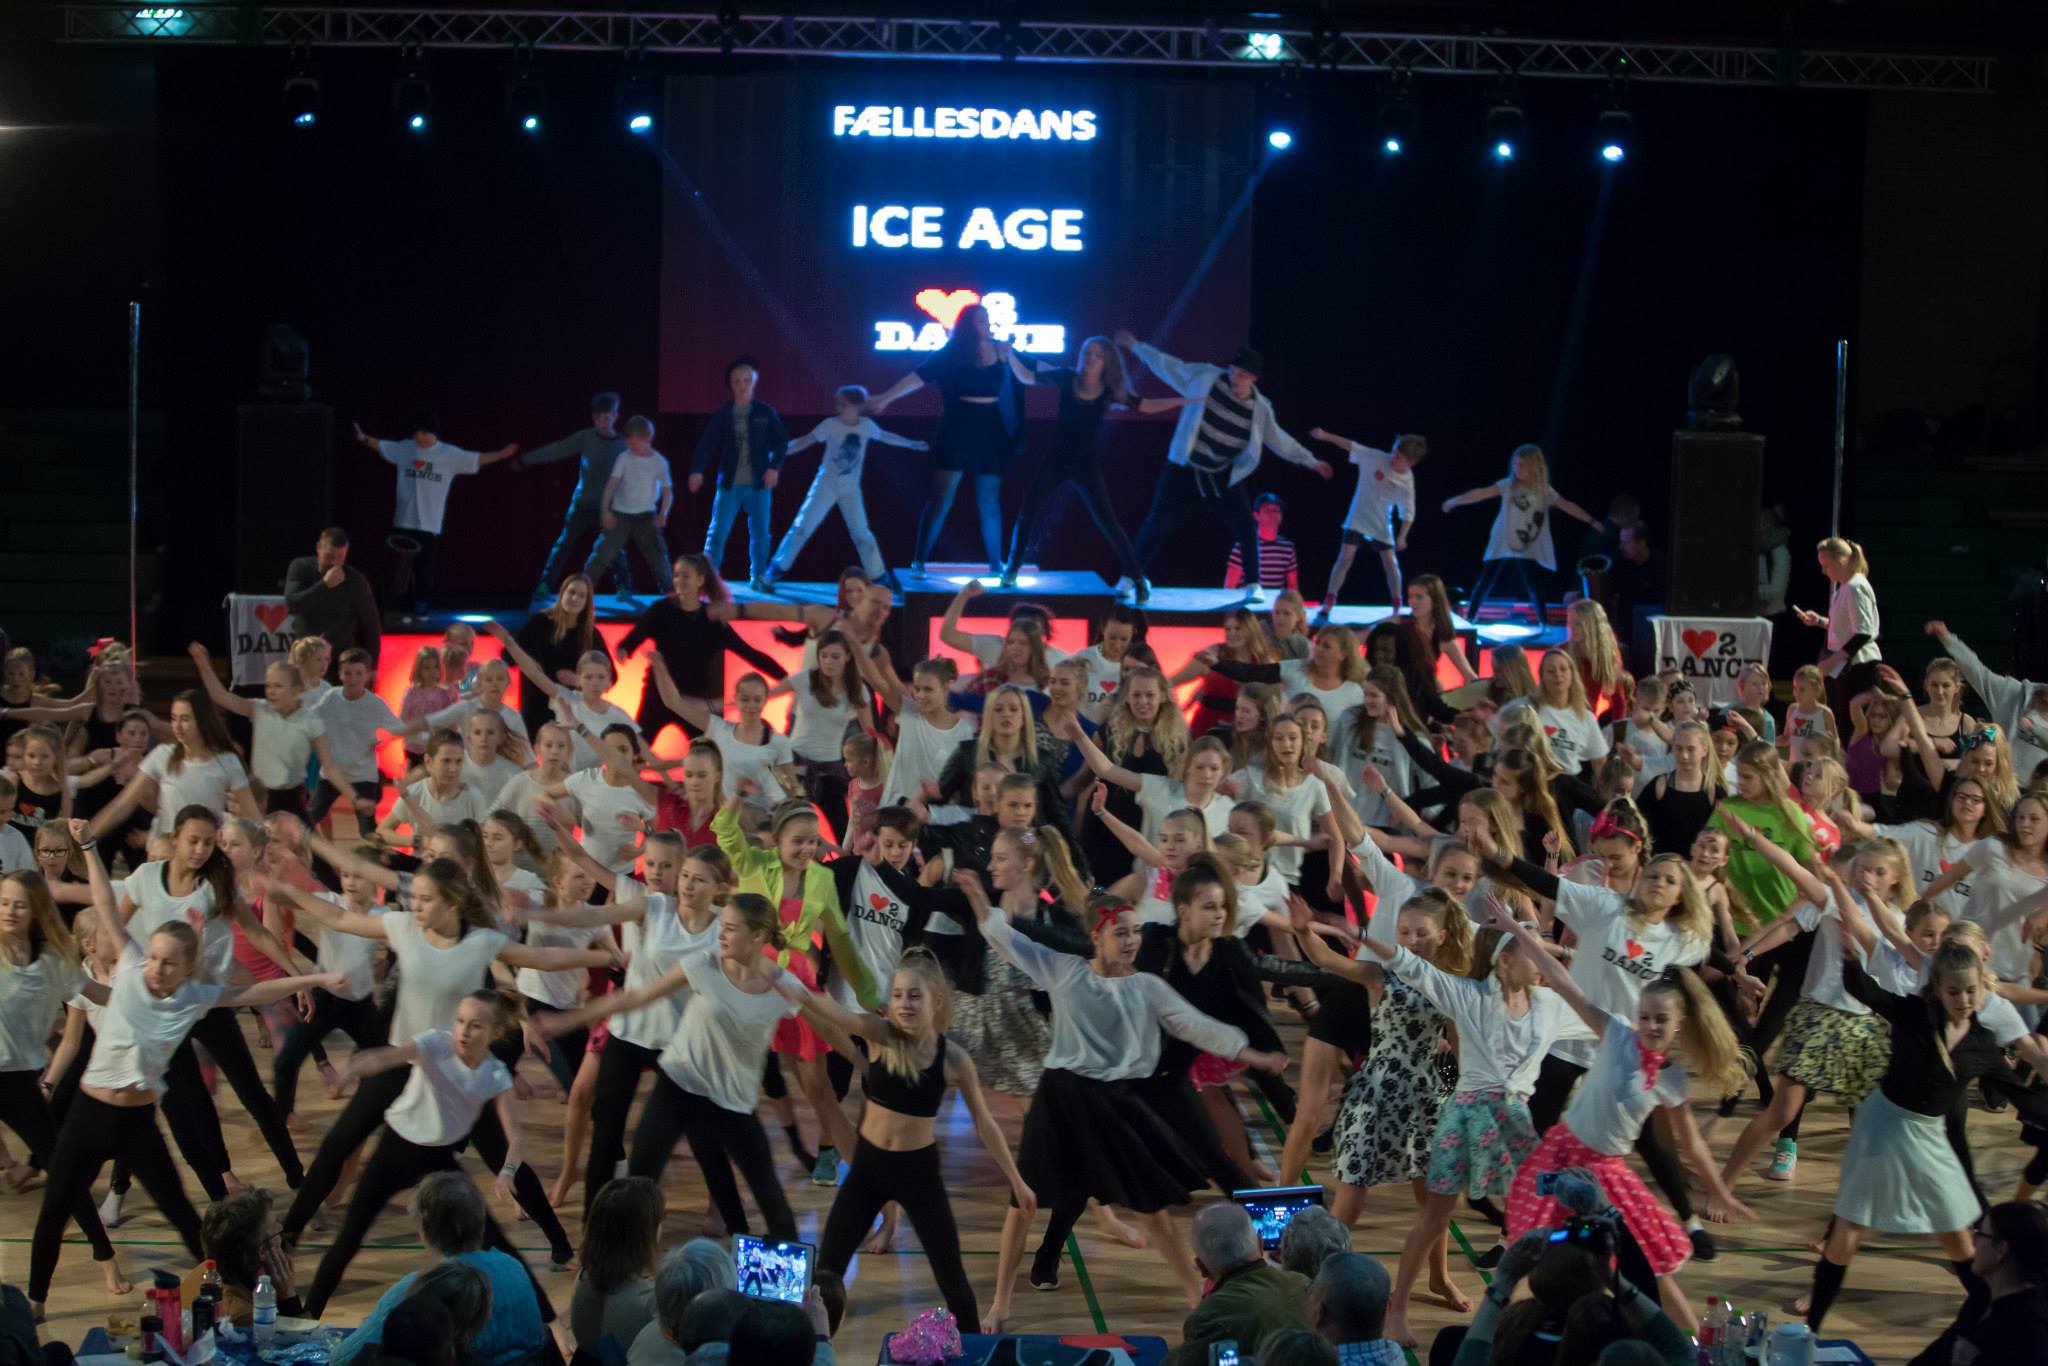 Love2dance final, Ice age 2015